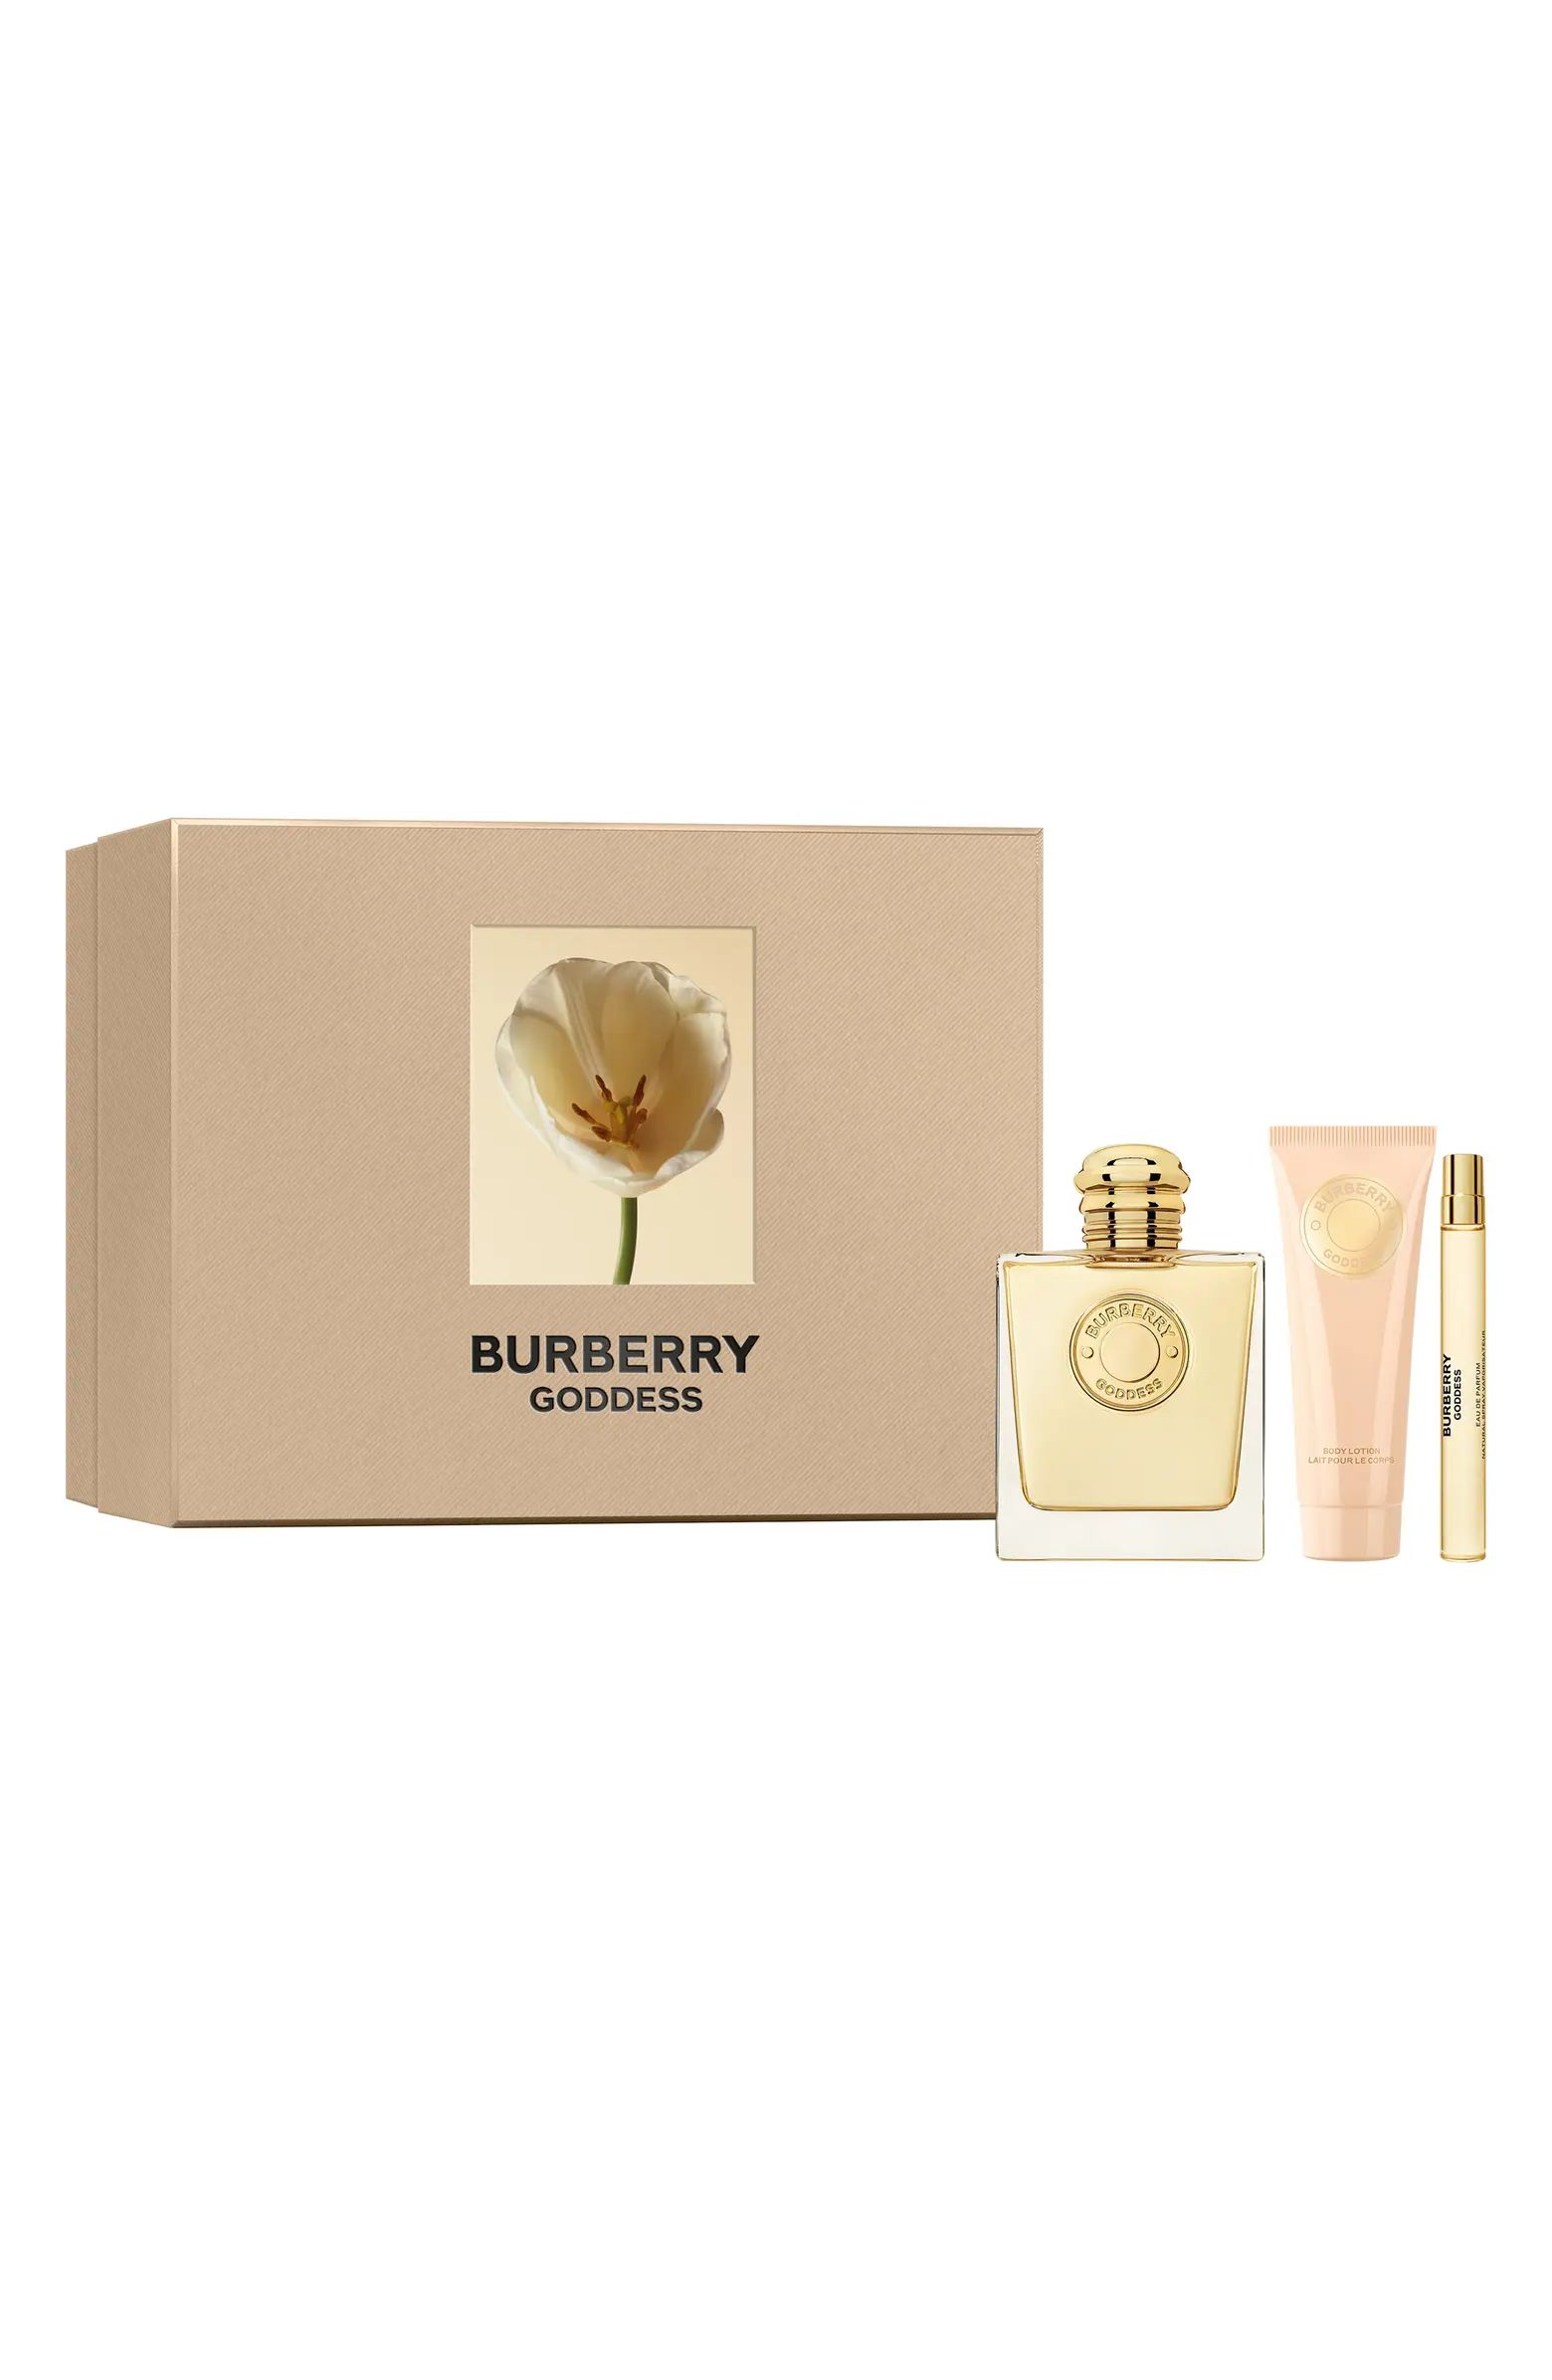 Burberry Goddess Eau de Parfum Set (Limited Edition) $231 Value | Nordstrom | Nordstrom